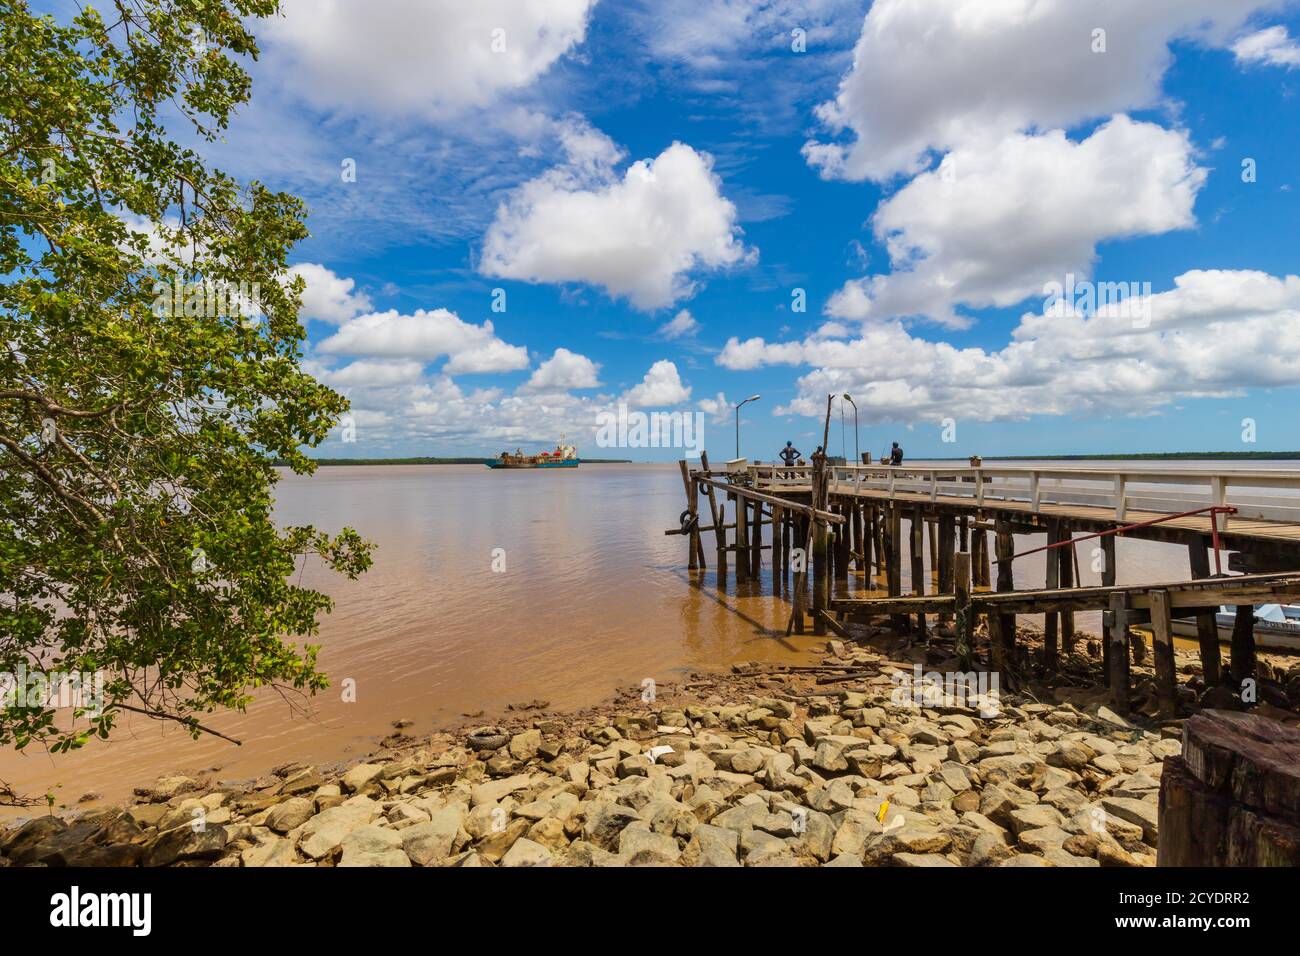 Nieuw Amsterdam Pier Am Suriname River Bank Im Süden Amerika Stockfoto